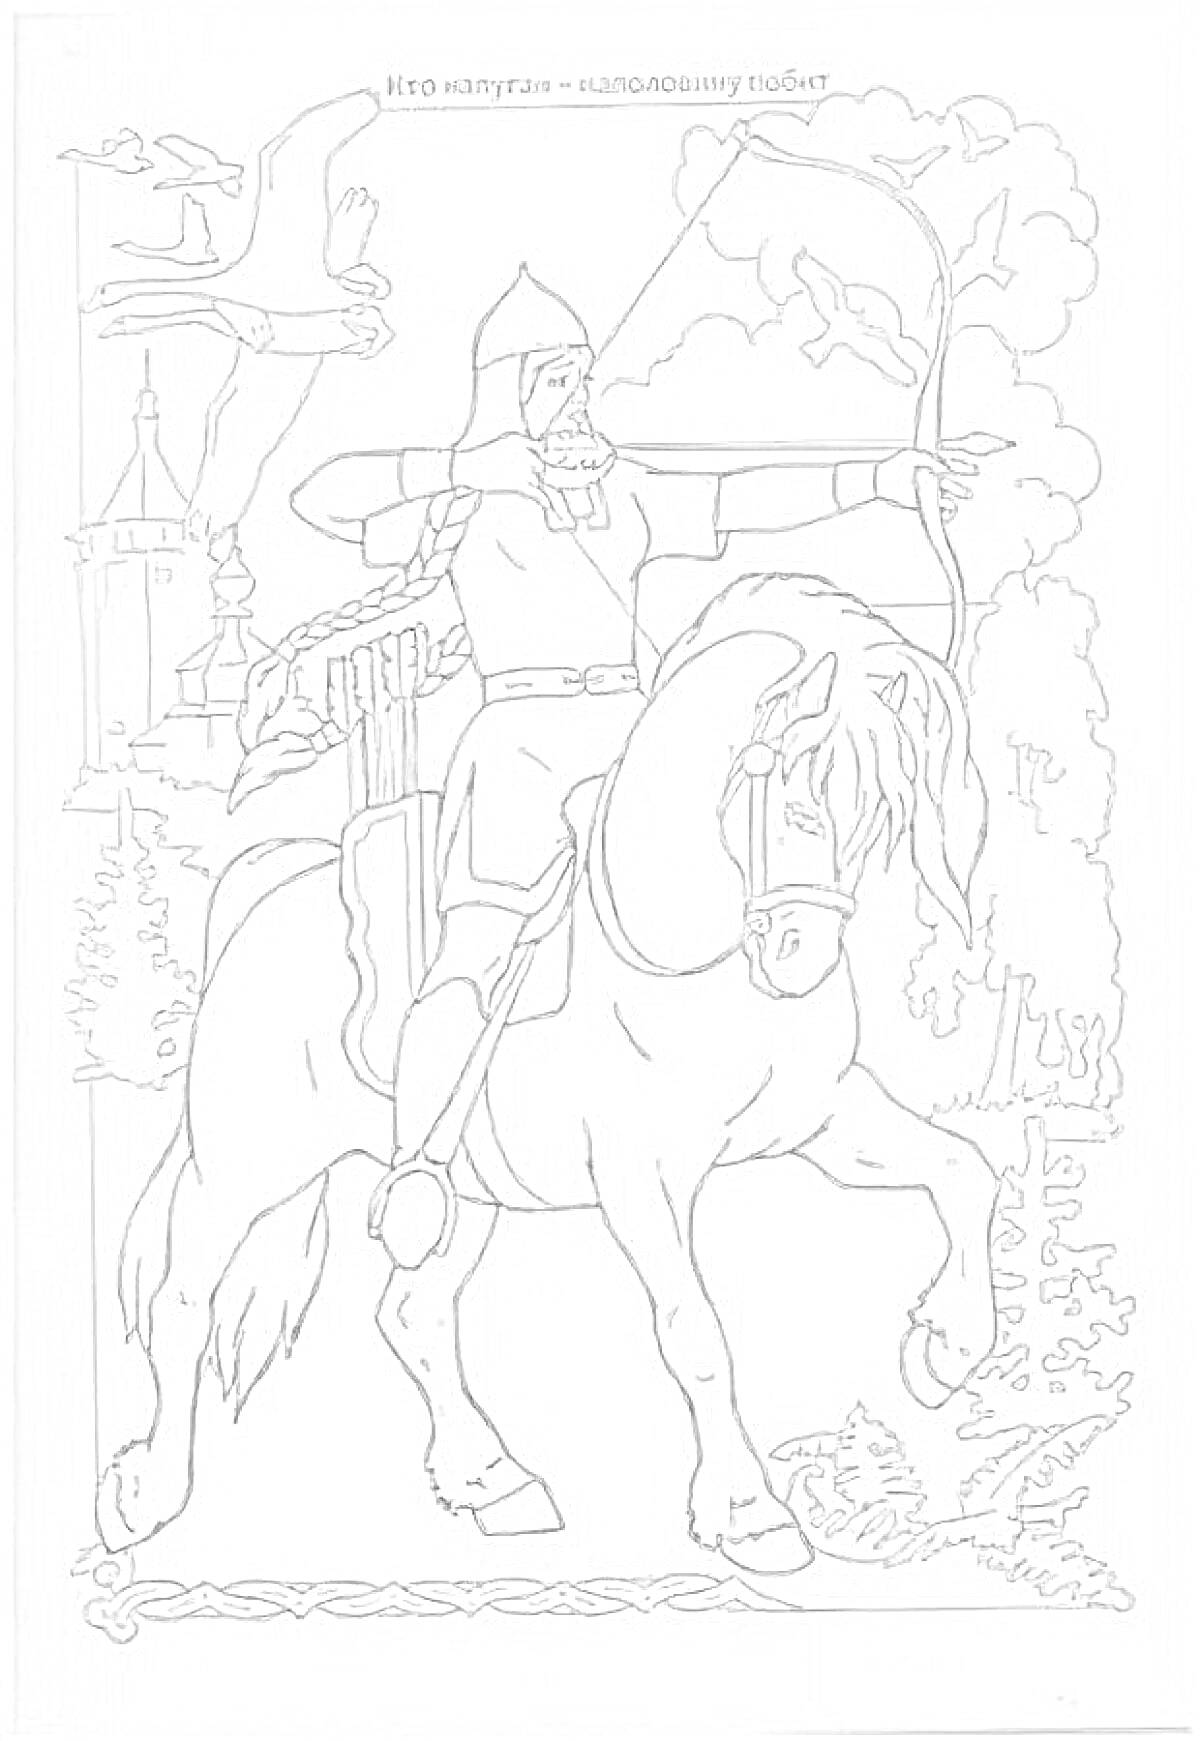 Александр Невский стреляет из лука, изображен на коне среди природы, на заднем плане башни и птицы